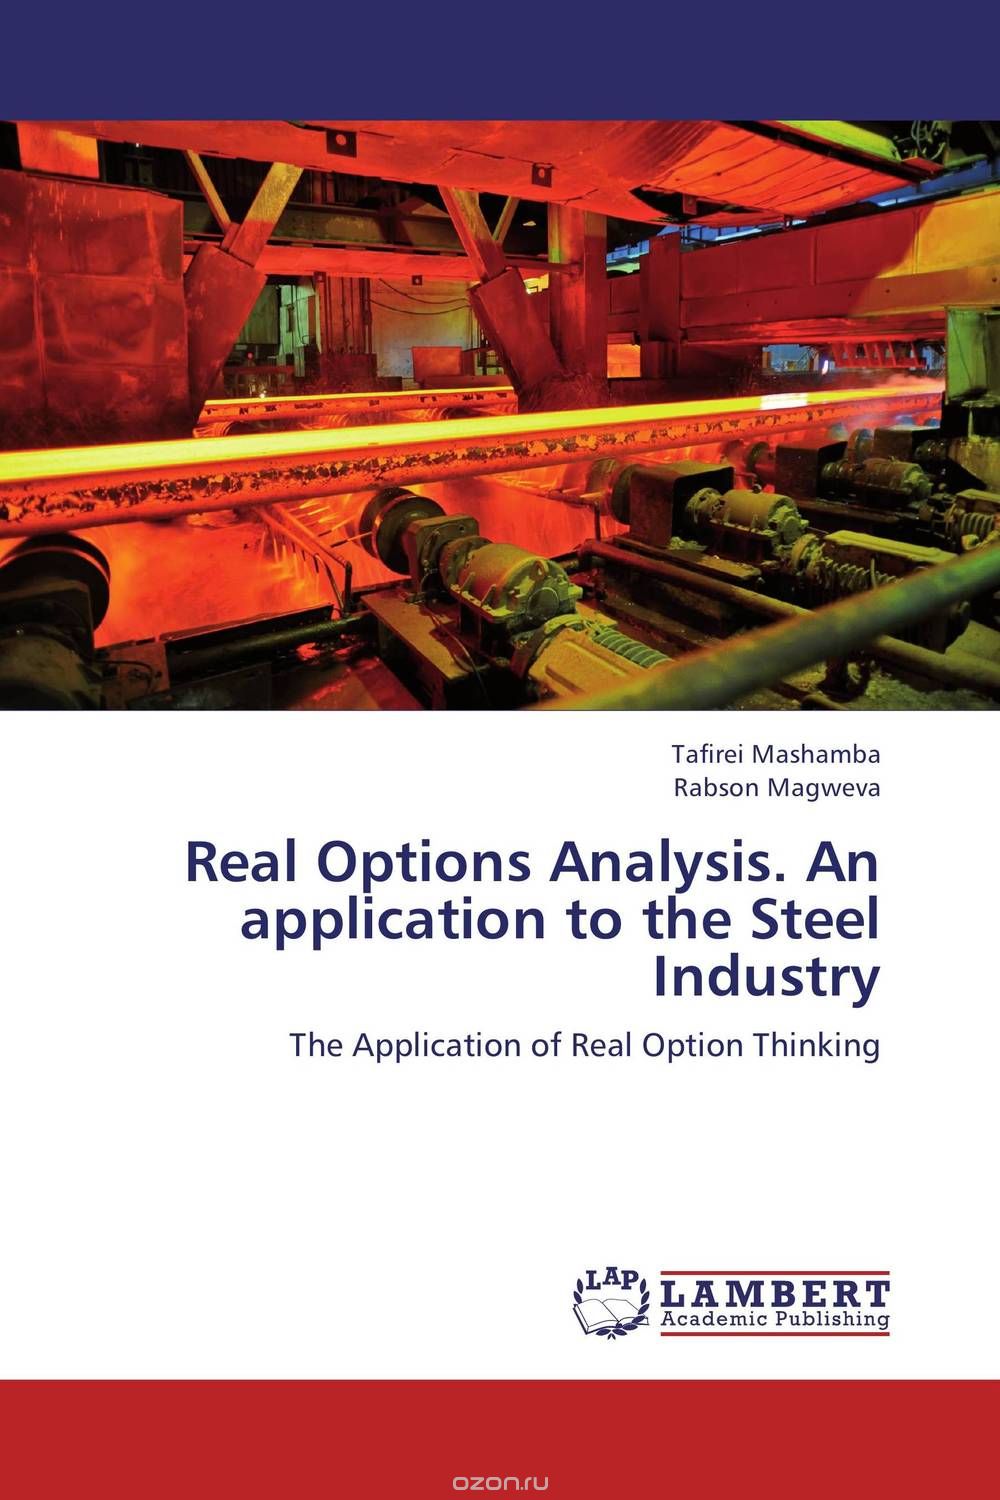 Скачать книгу "Real Options Analysis. An application to the Steel Industry"